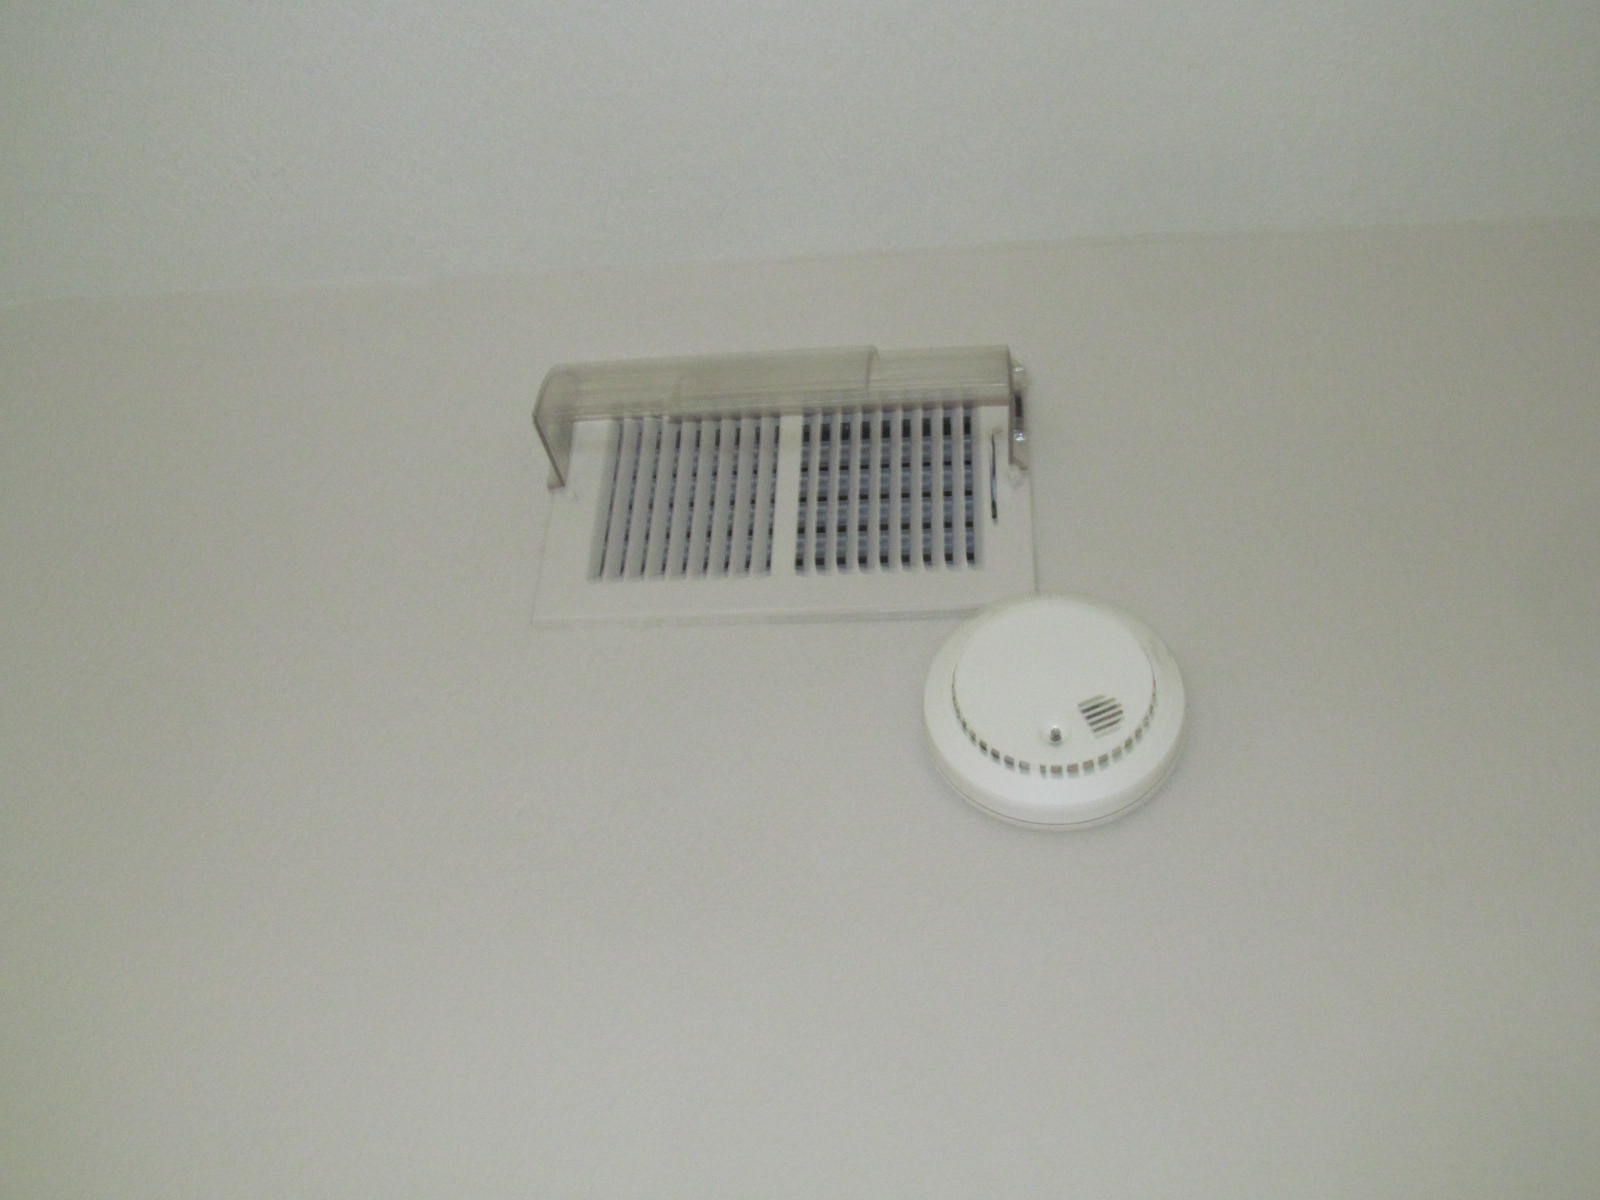 Smoke alarm by vent may fail